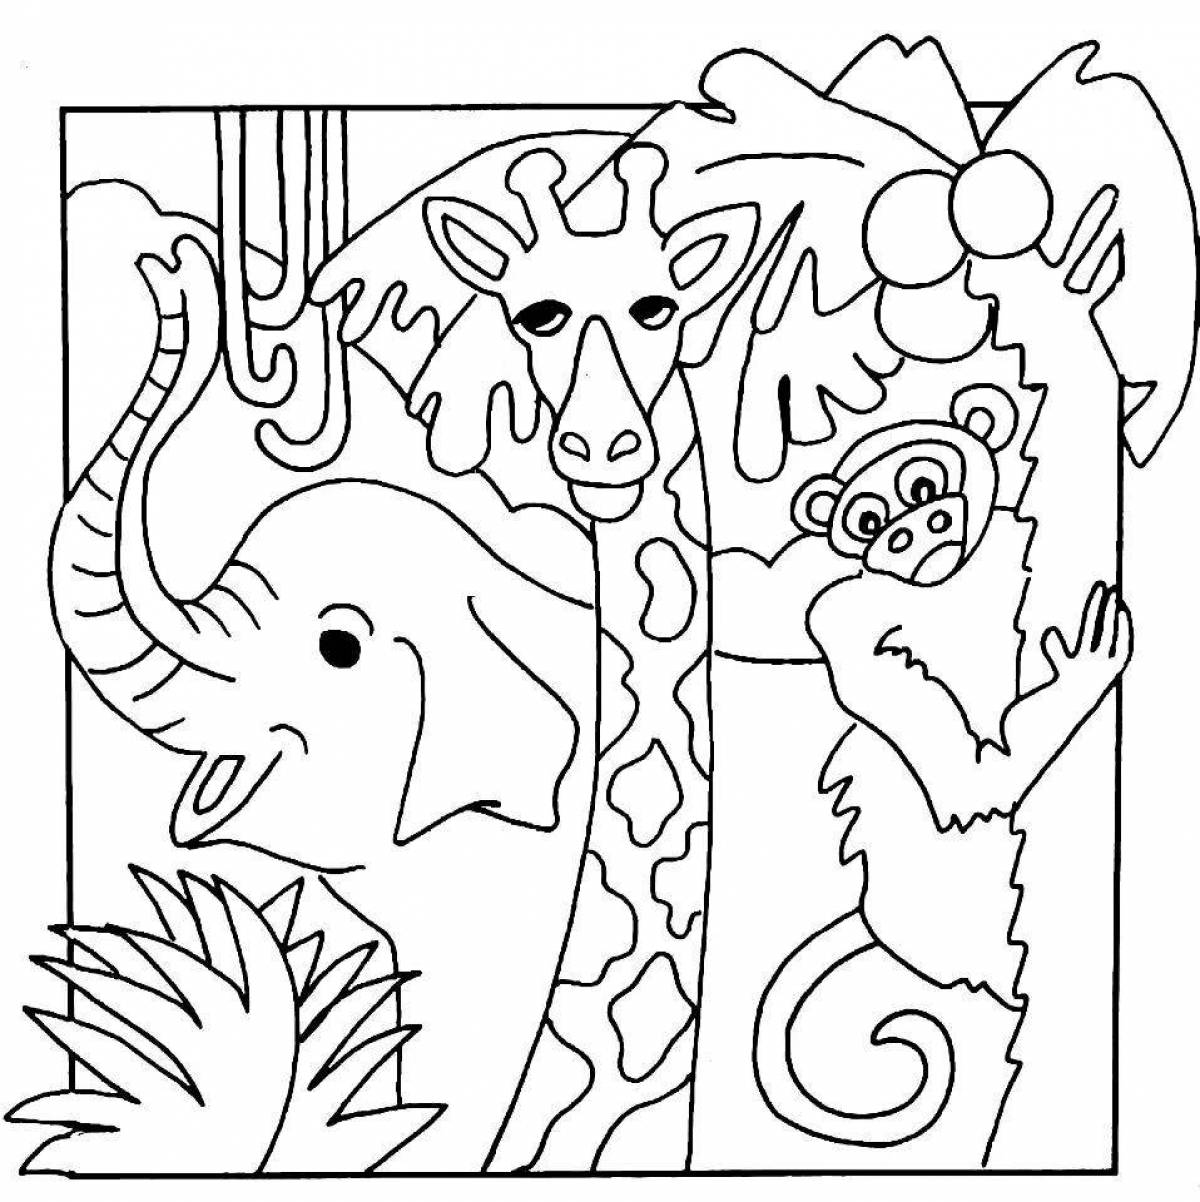 Fabulous aardvark coloring page